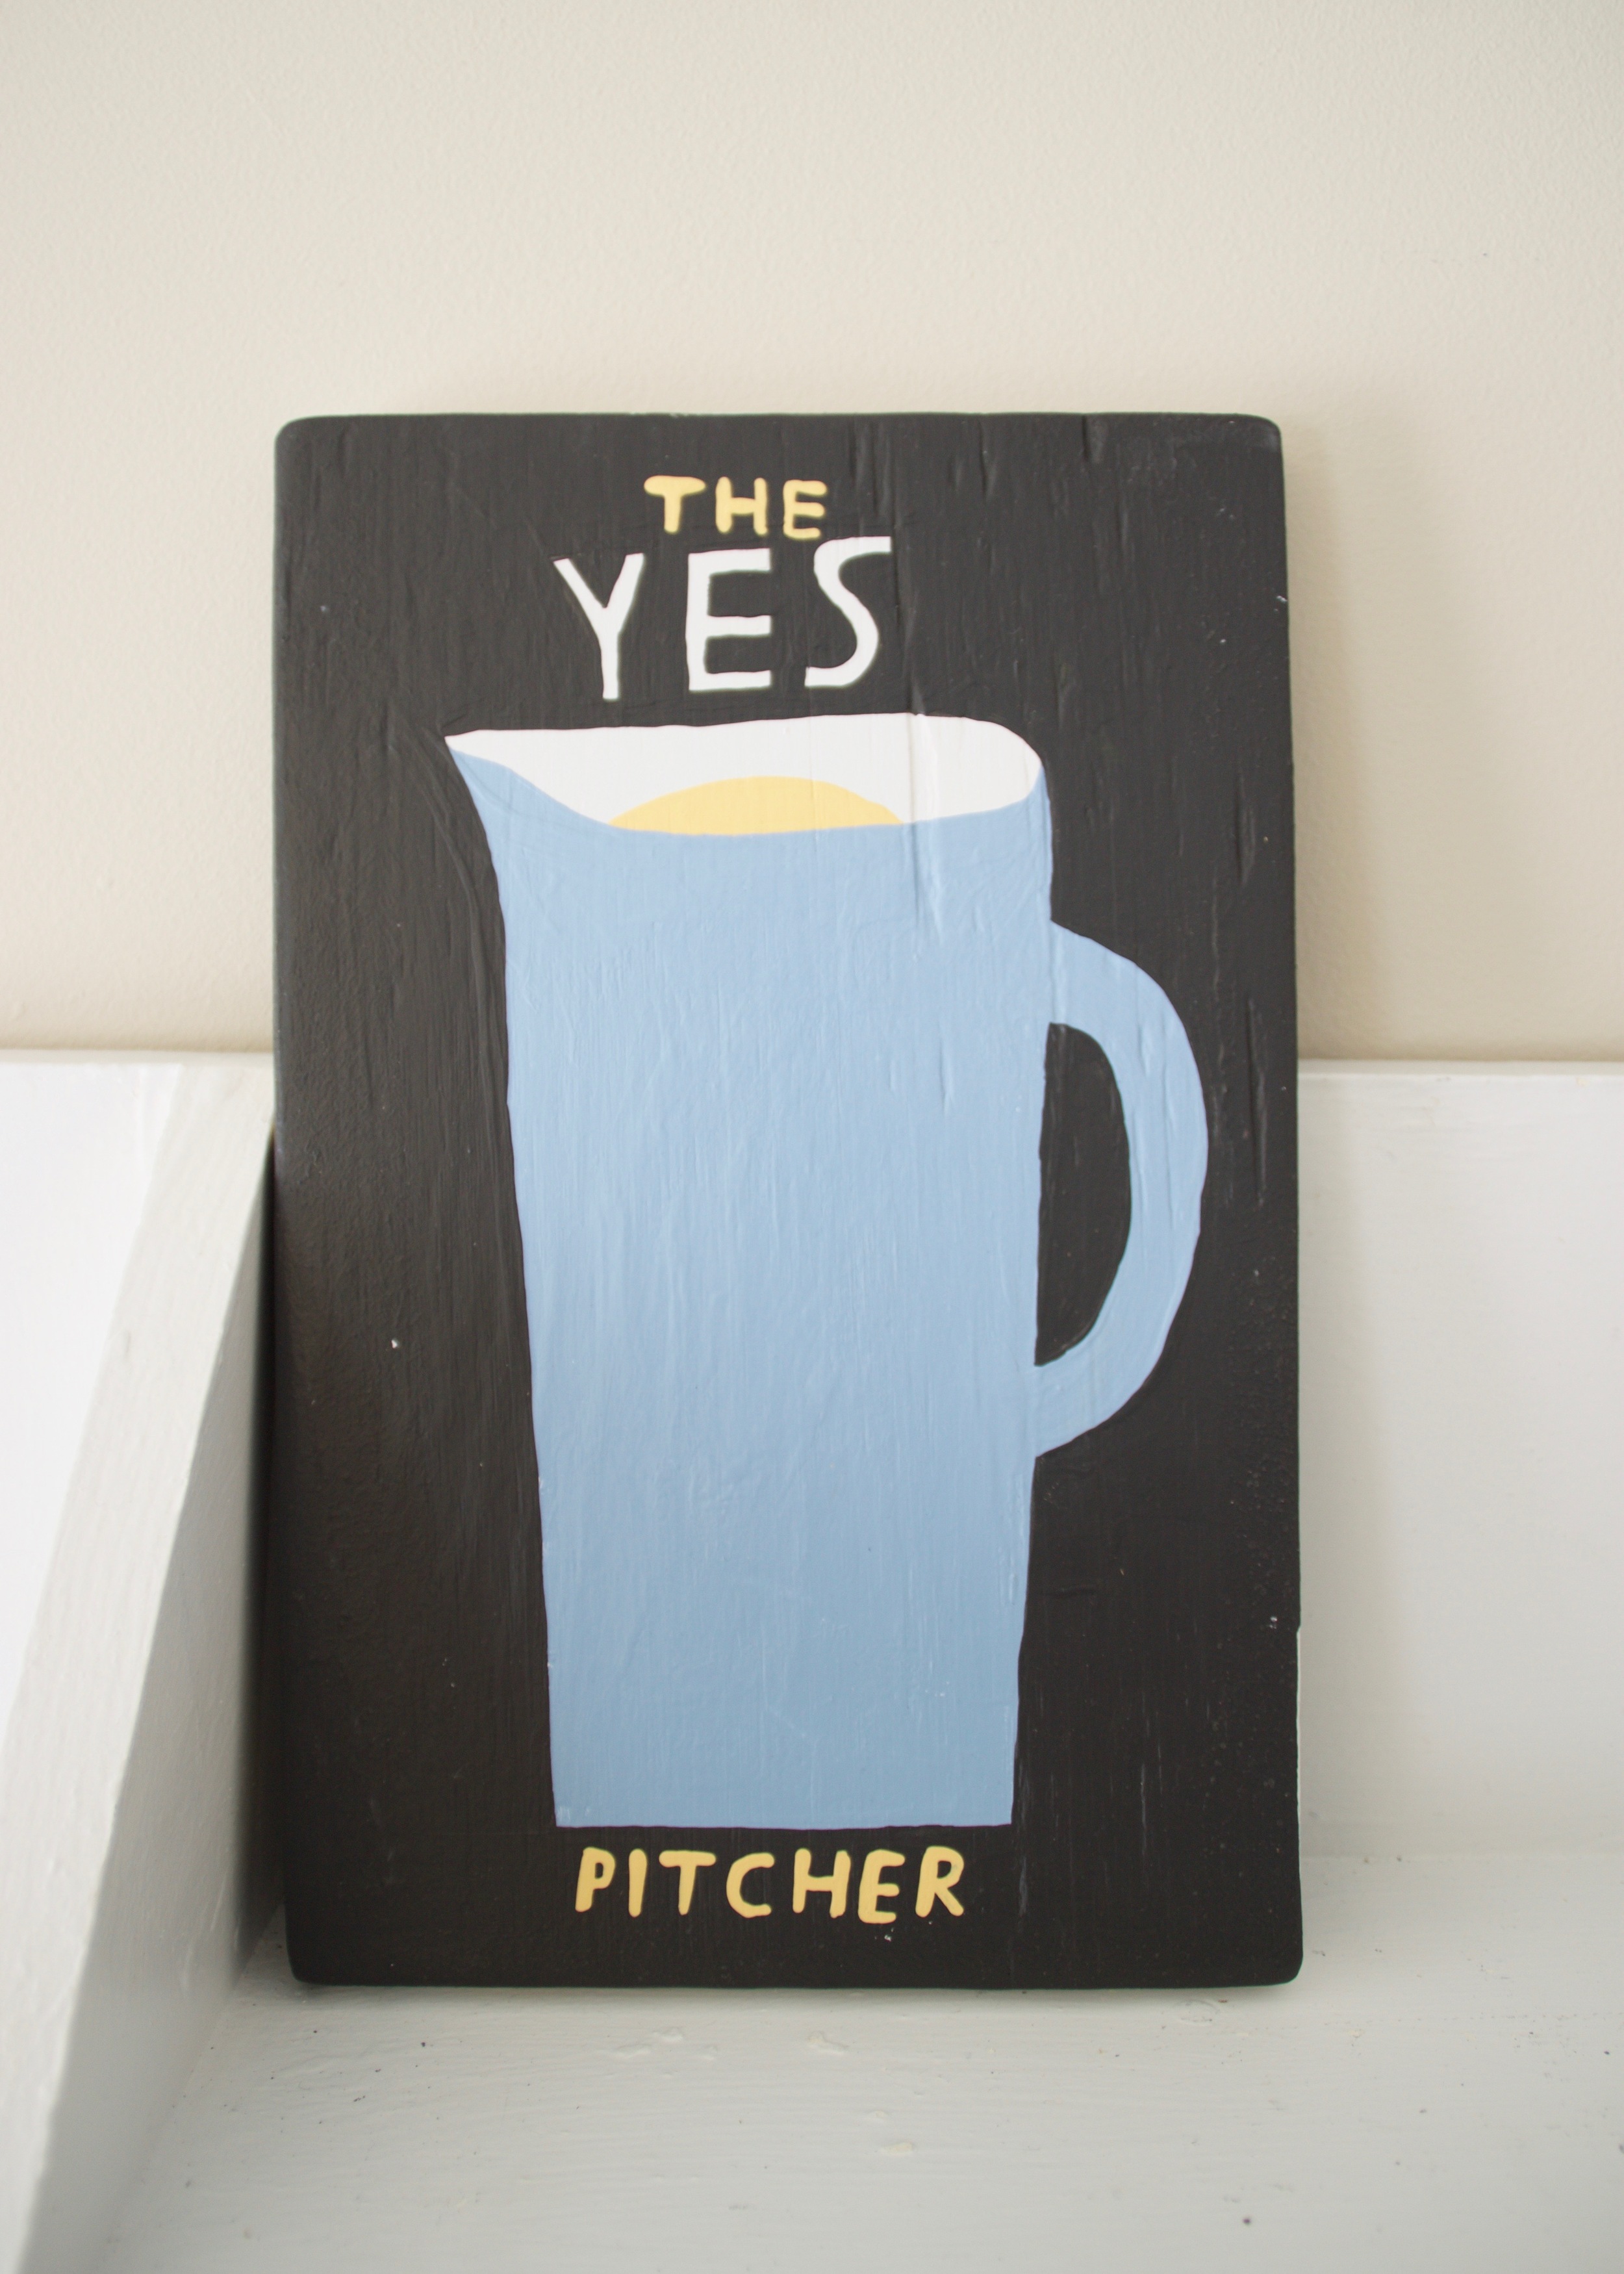   A Book Called A Pitcher Of Yes , 2016 &nbsp; &nbsp; &nbsp; &nbsp; &nbsp; &nbsp; &nbsp; &nbsp; &nbsp; &nbsp;&nbsp; acrylic, wood |&nbsp;11 x 17 in. 